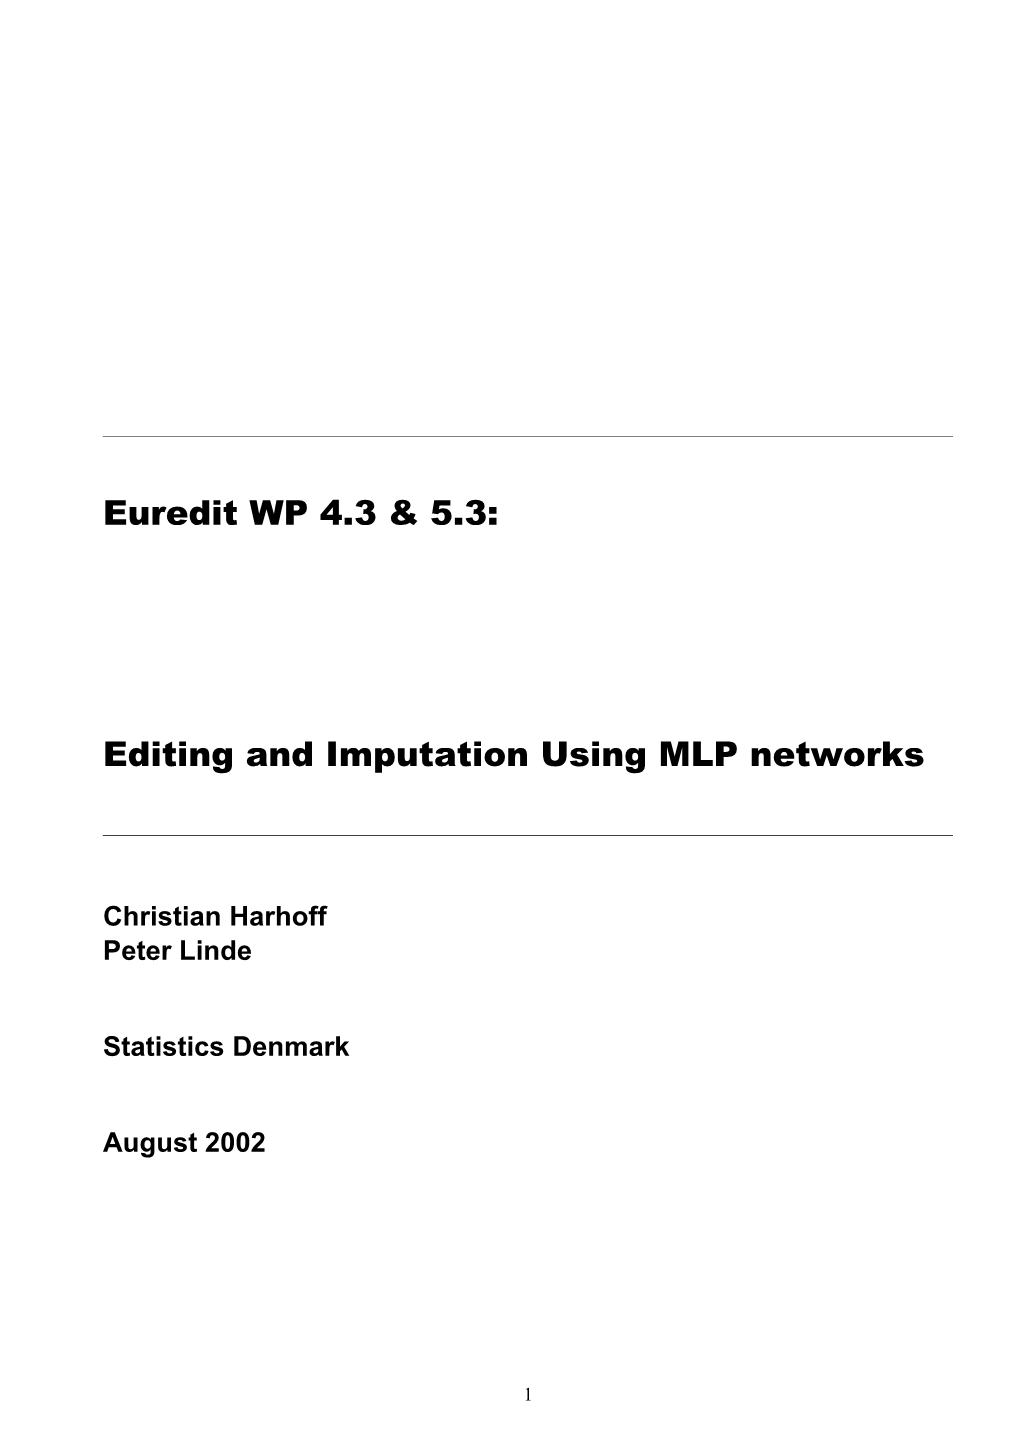 Edit and Imputation Using MLP